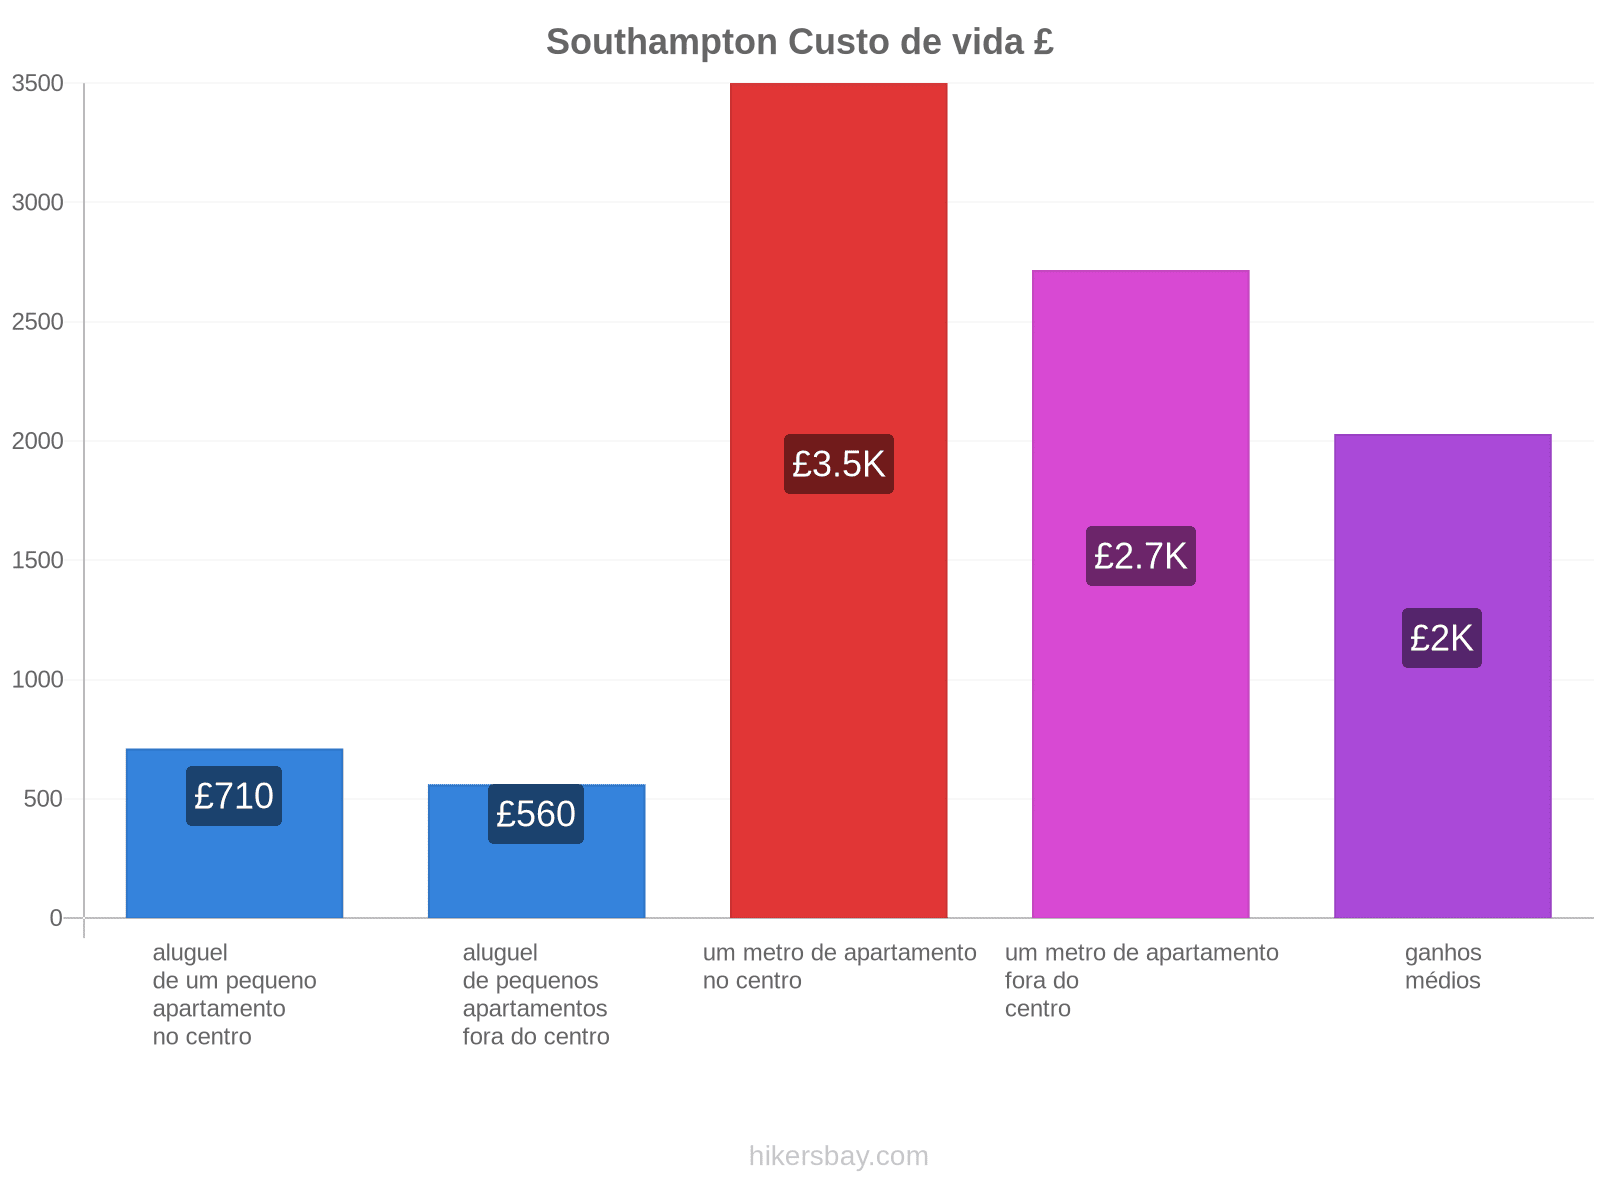 Southampton custo de vida hikersbay.com